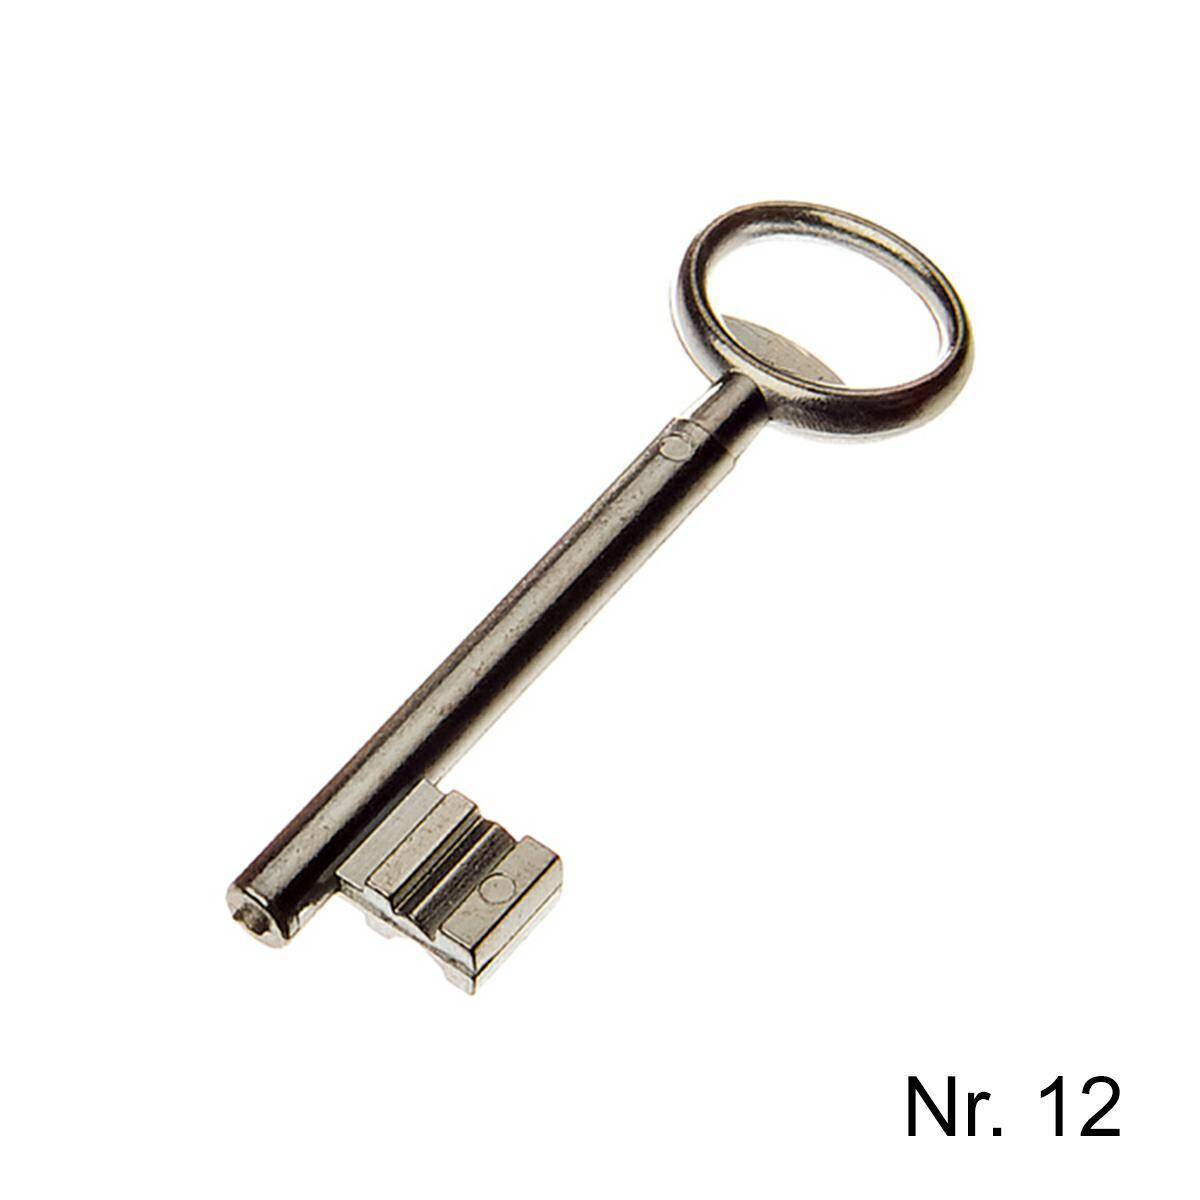 Cast key Jania for the lock - No. 12